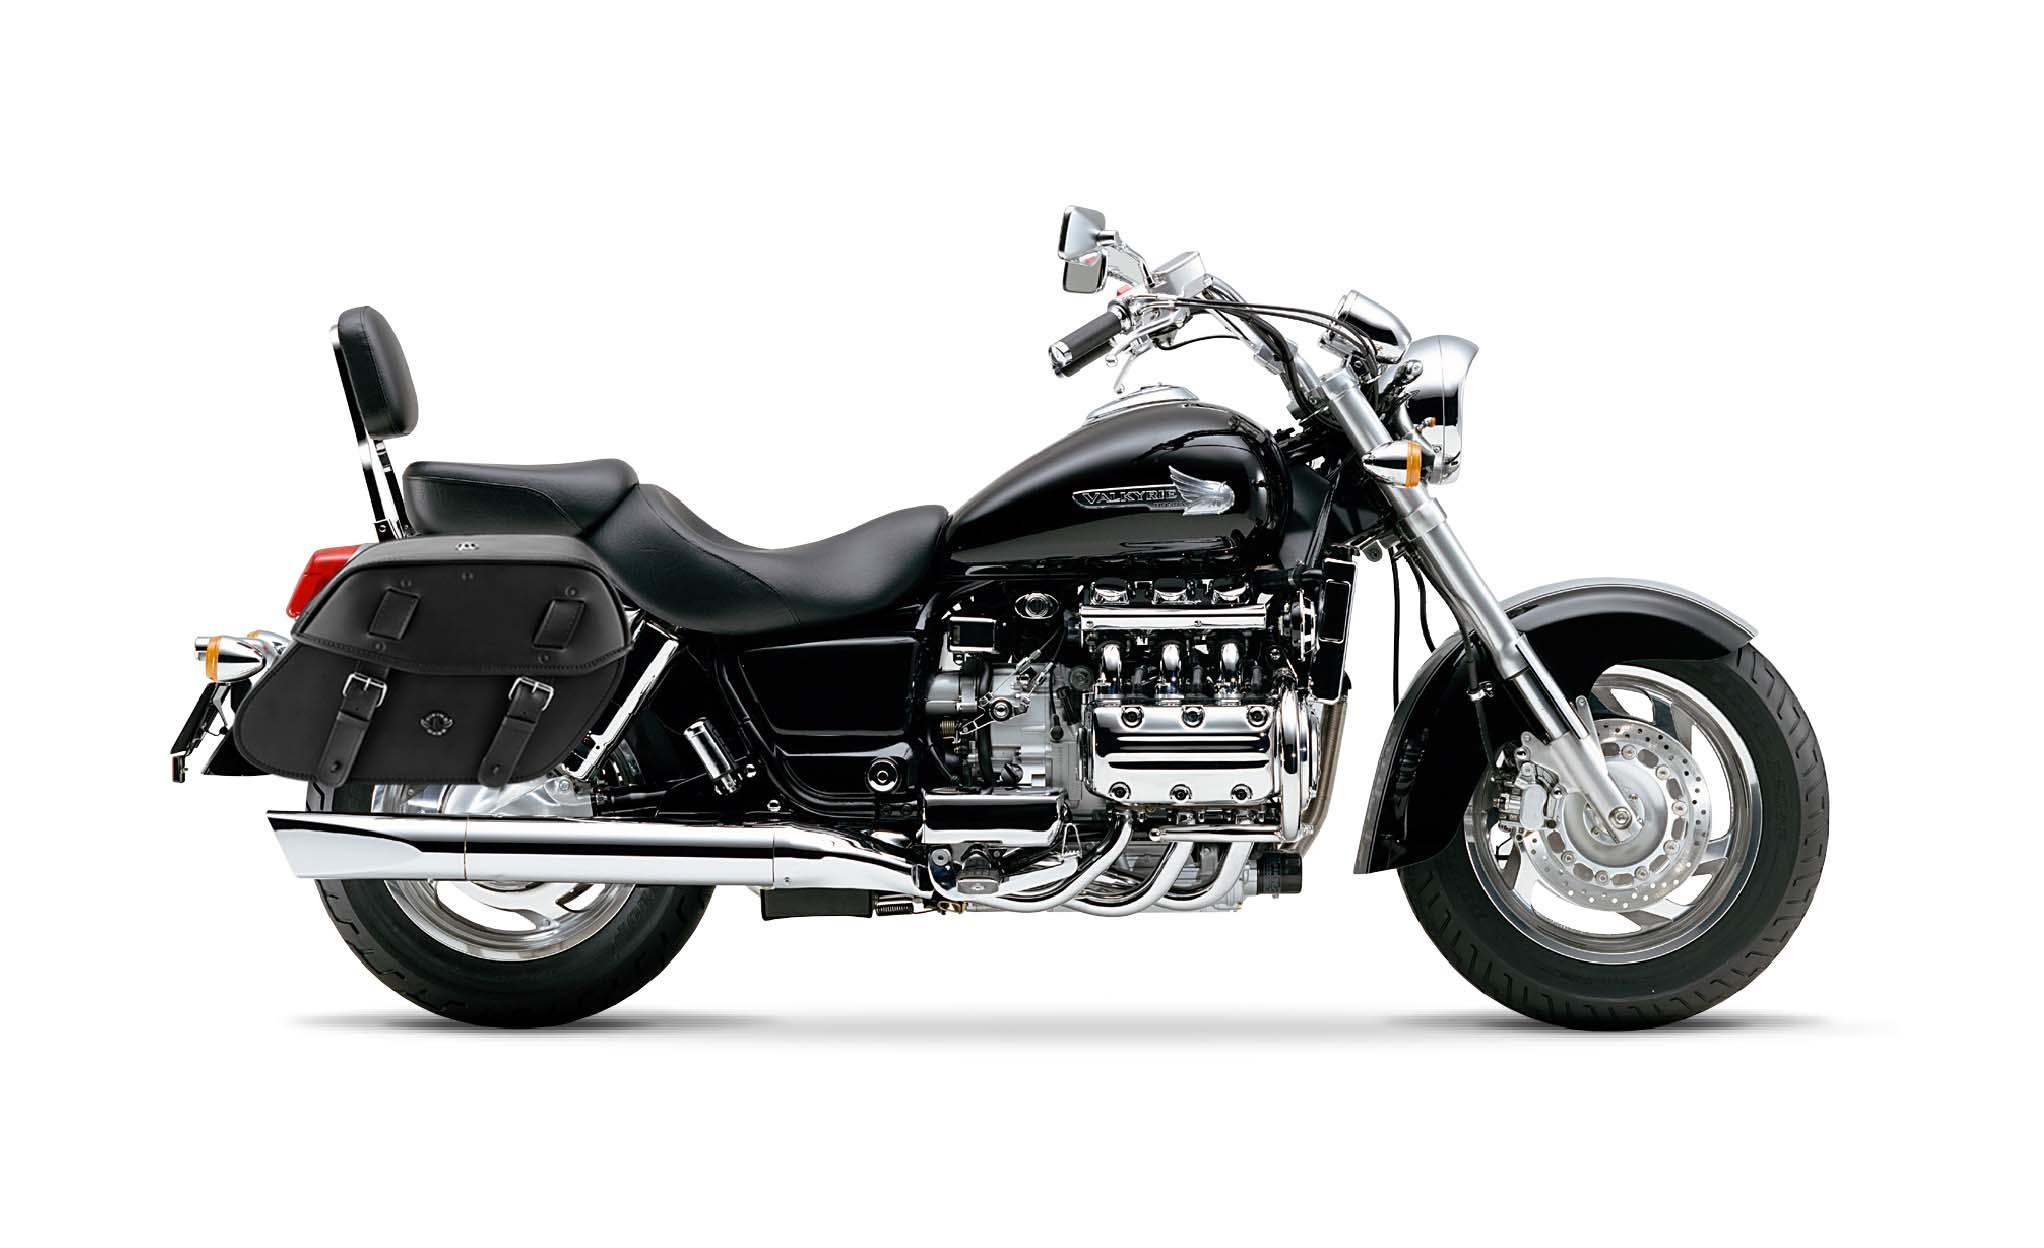 Viking Odin Large Honda Valkyrie 1500 Standard Leather Motorcycle Saddlebags on Bike Photo @expand